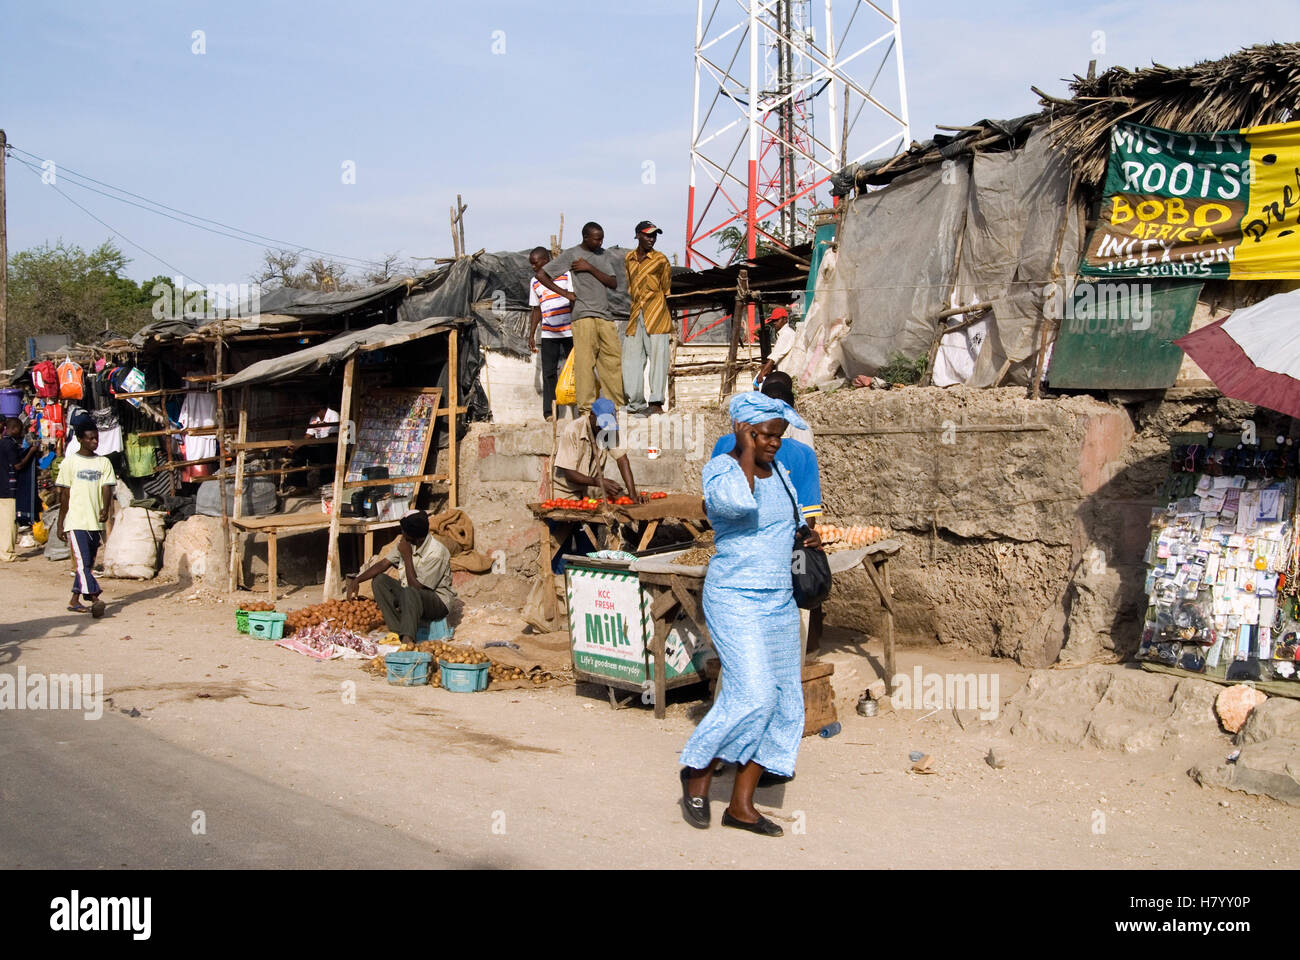 Scène de rue dans le sud de Mombasa, Kenya, Africa Banque D'Images